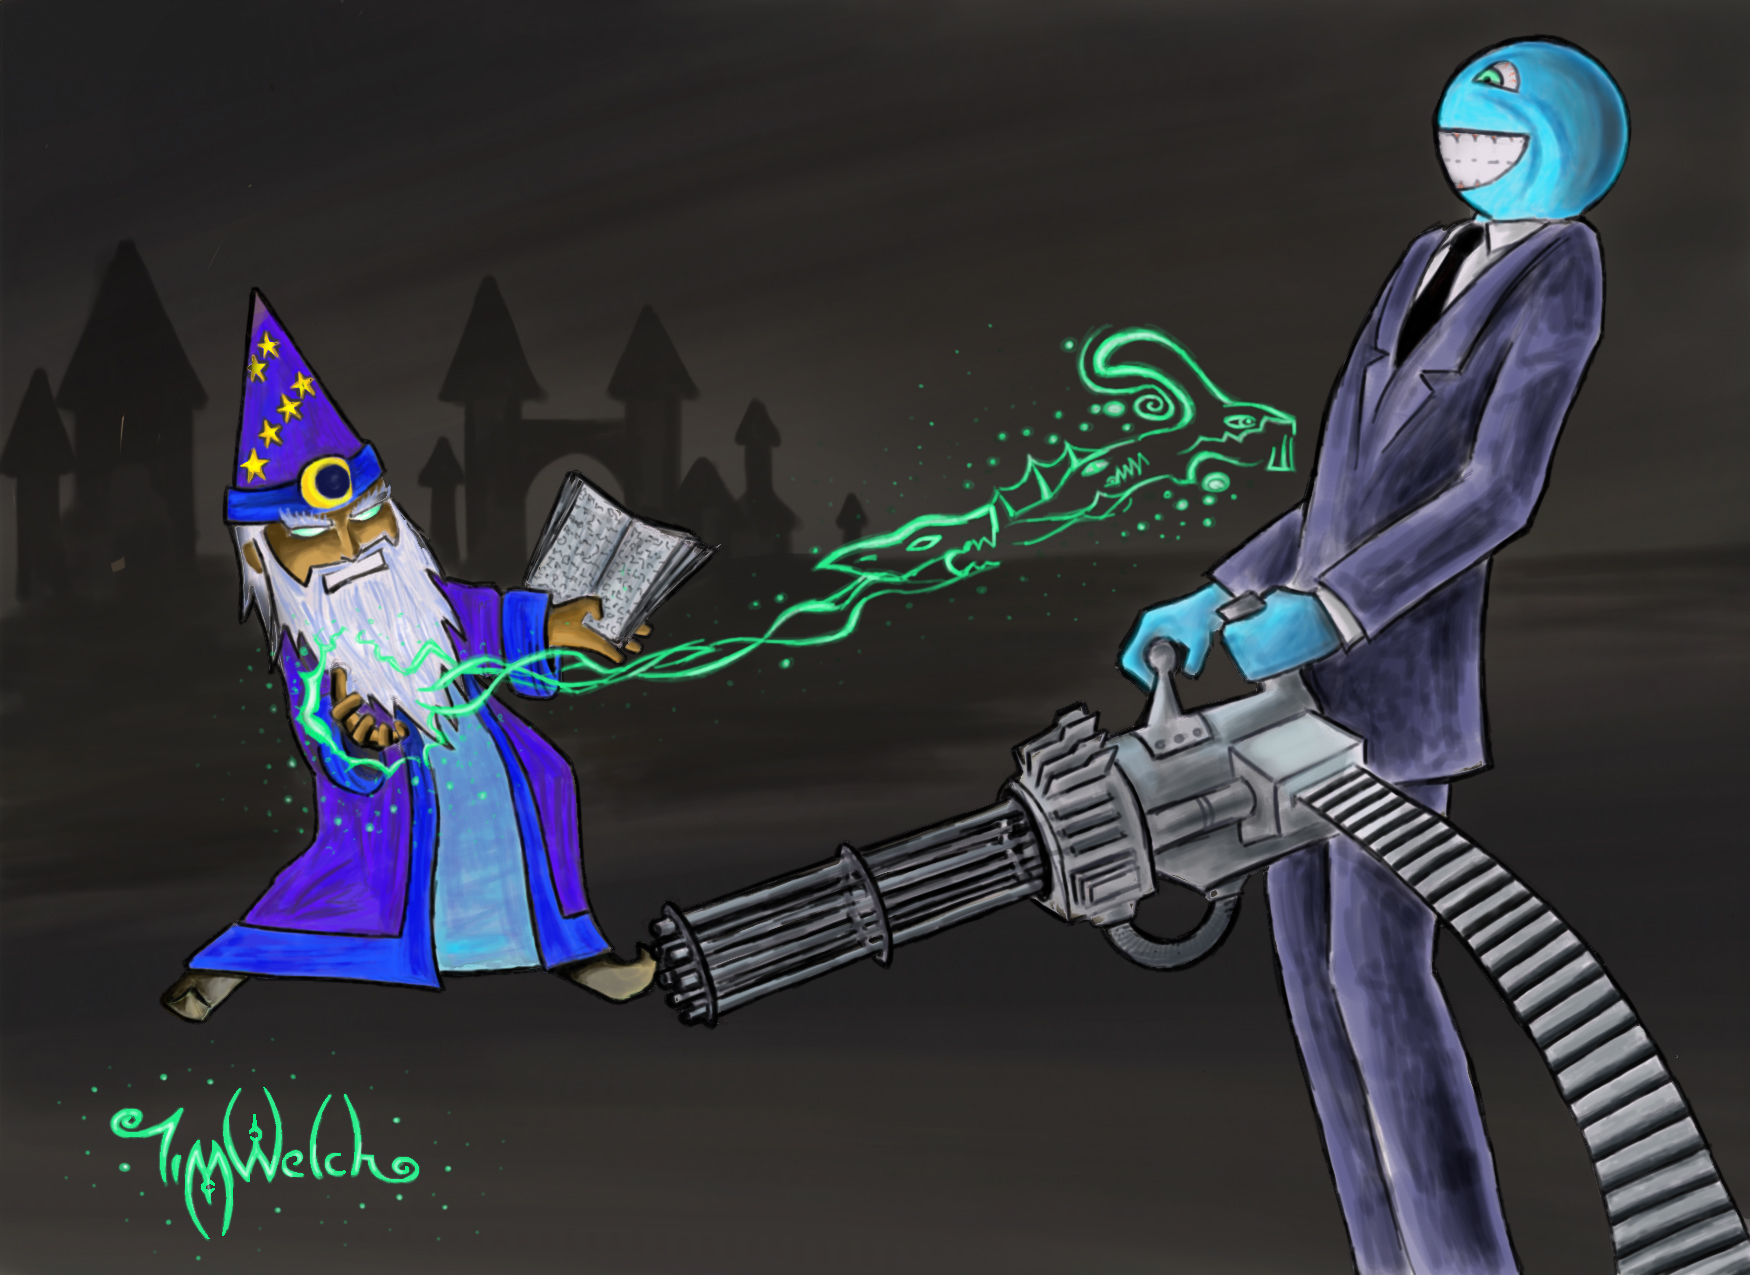 Wizard vs Man